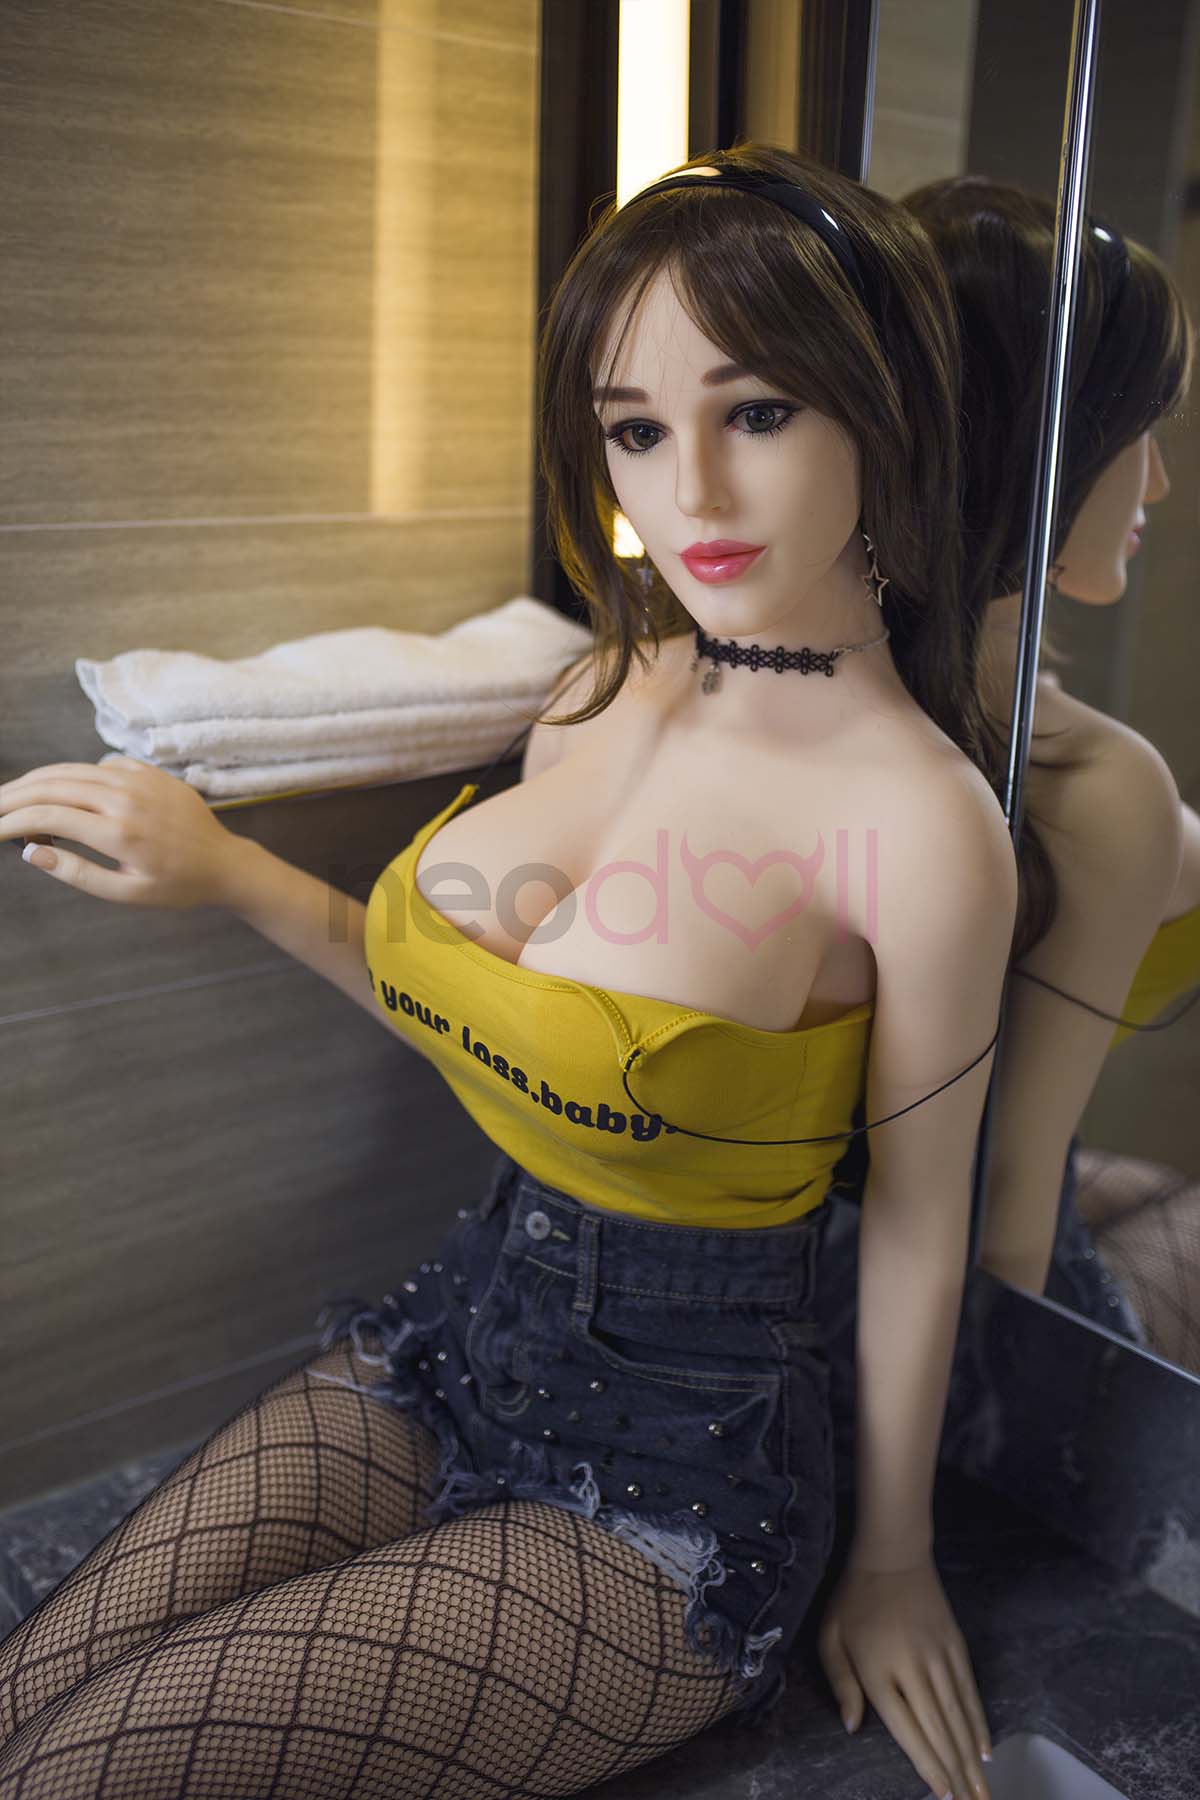 Neodoll Sugar Babe - Gertrude - Realistic Sex Doll - Gel Breast - Uterus - 170cm - Natural